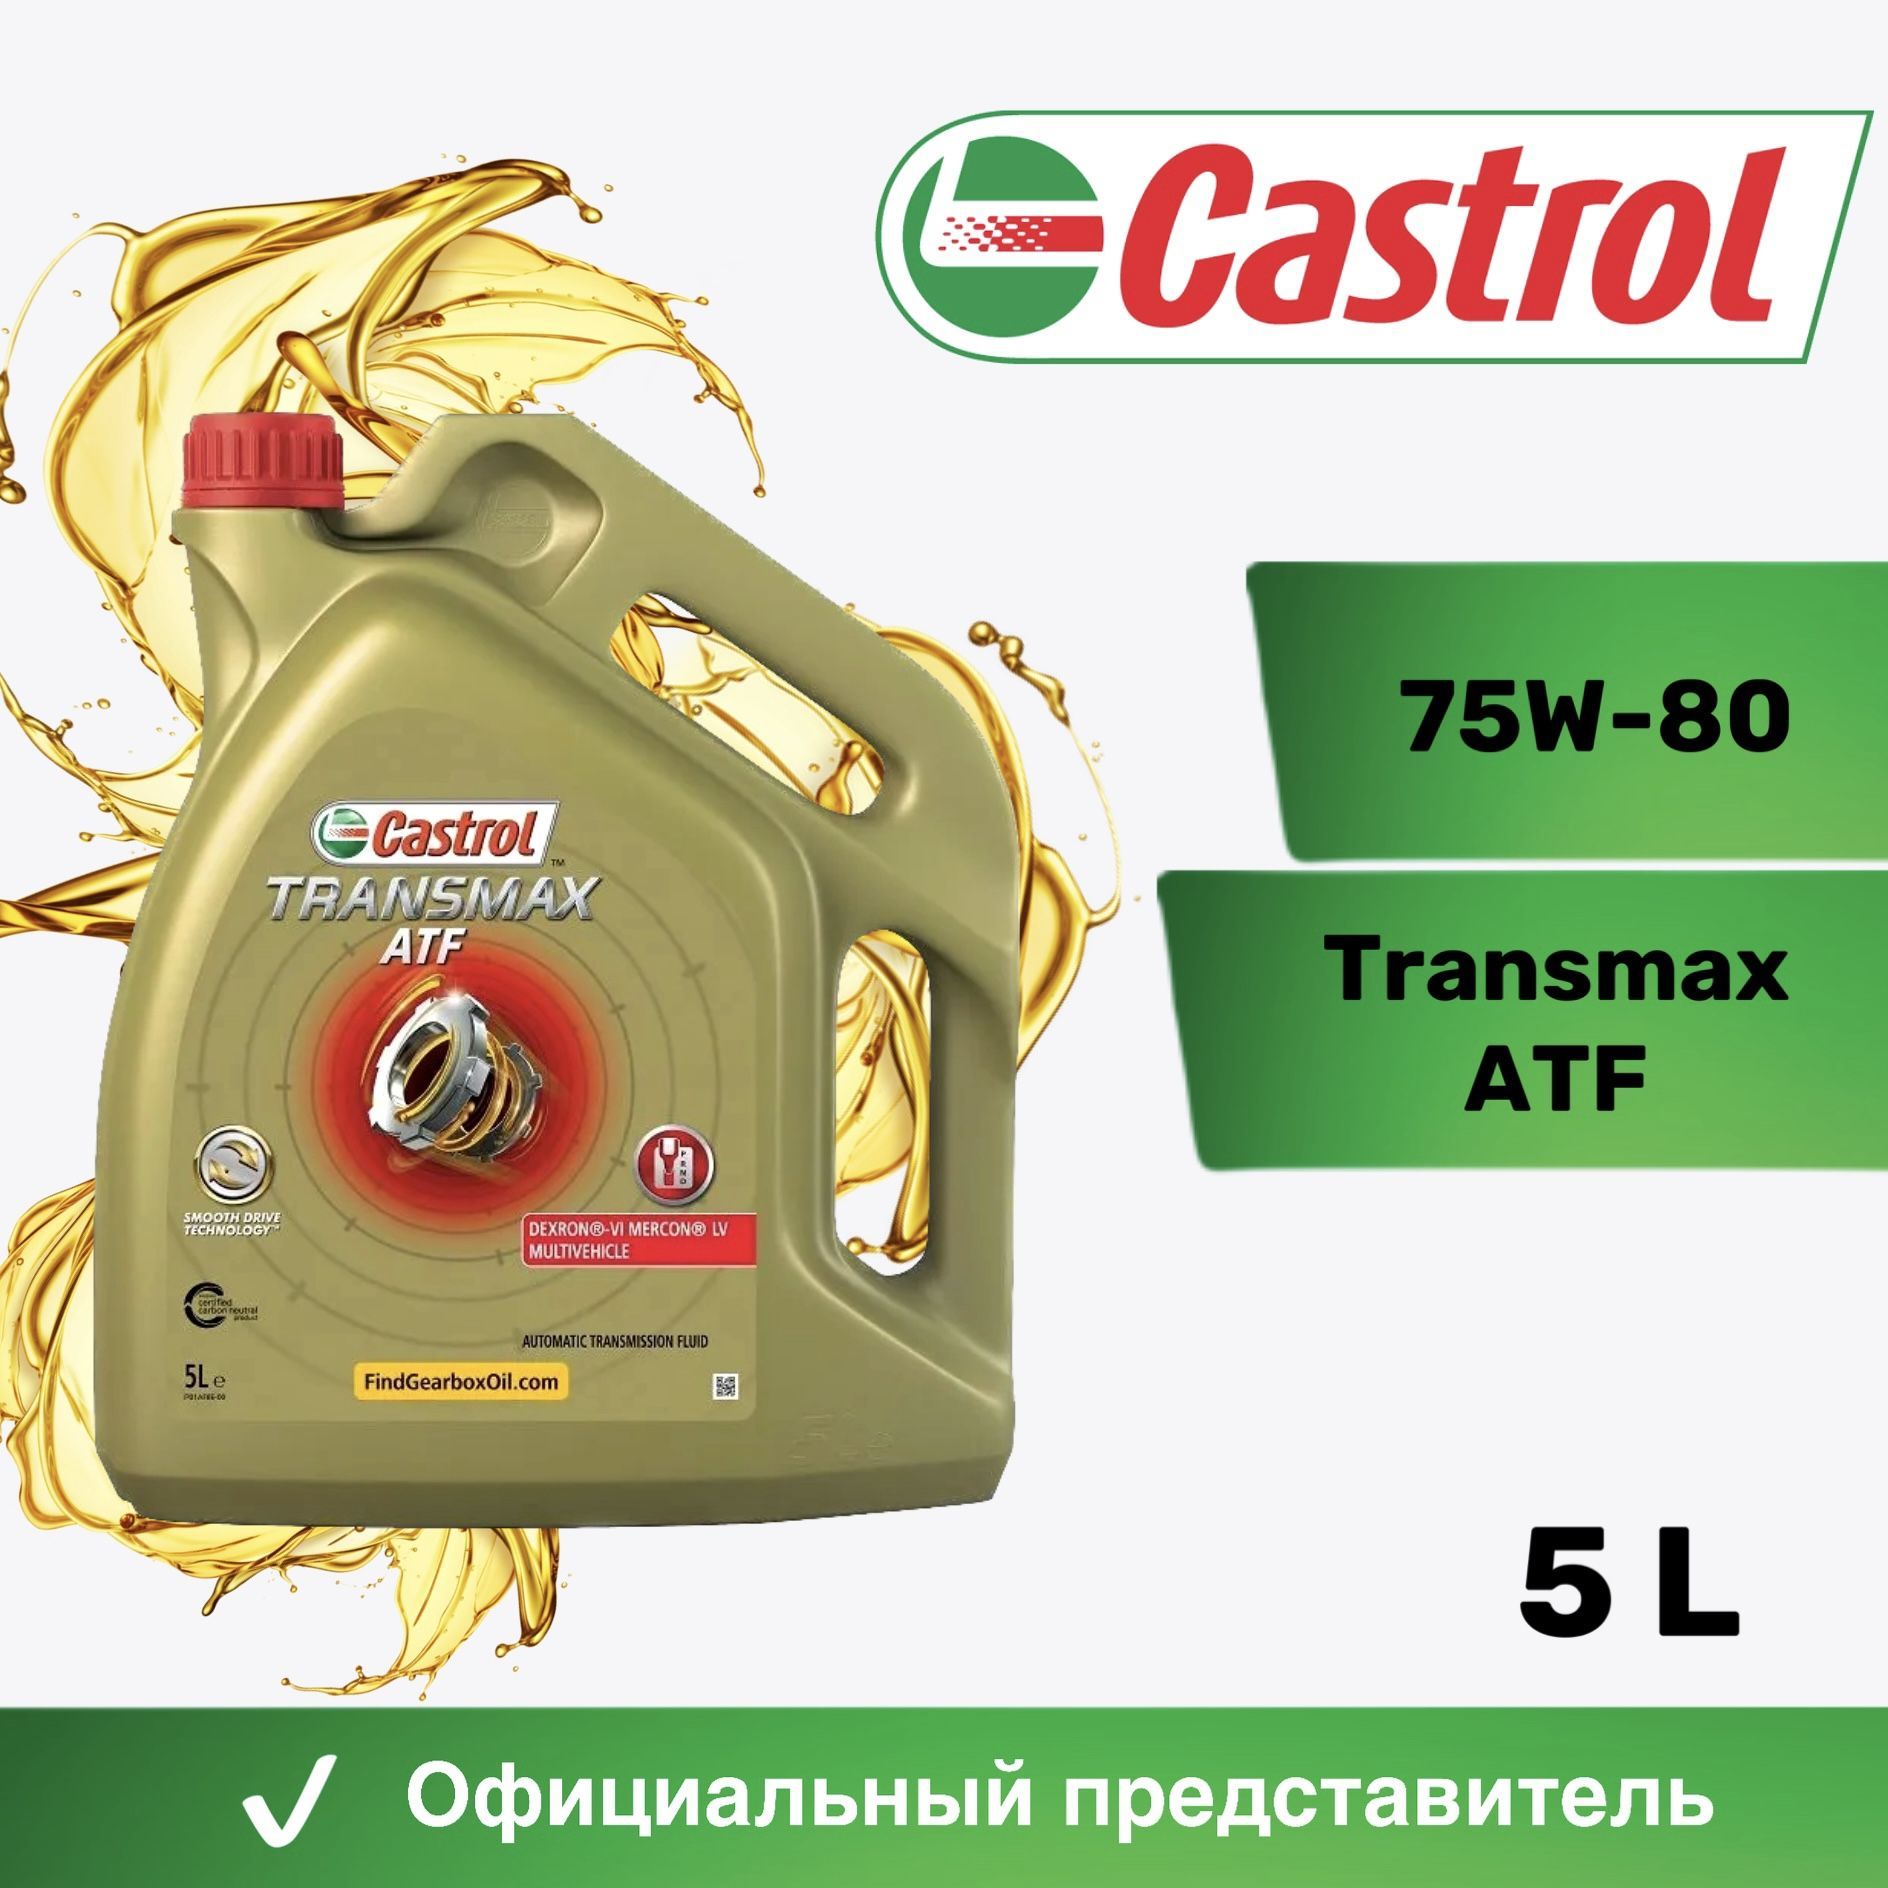 Castrol Transmax Universal 75w-90. Трансмиссионное масло Castrol Transmax z ATF.